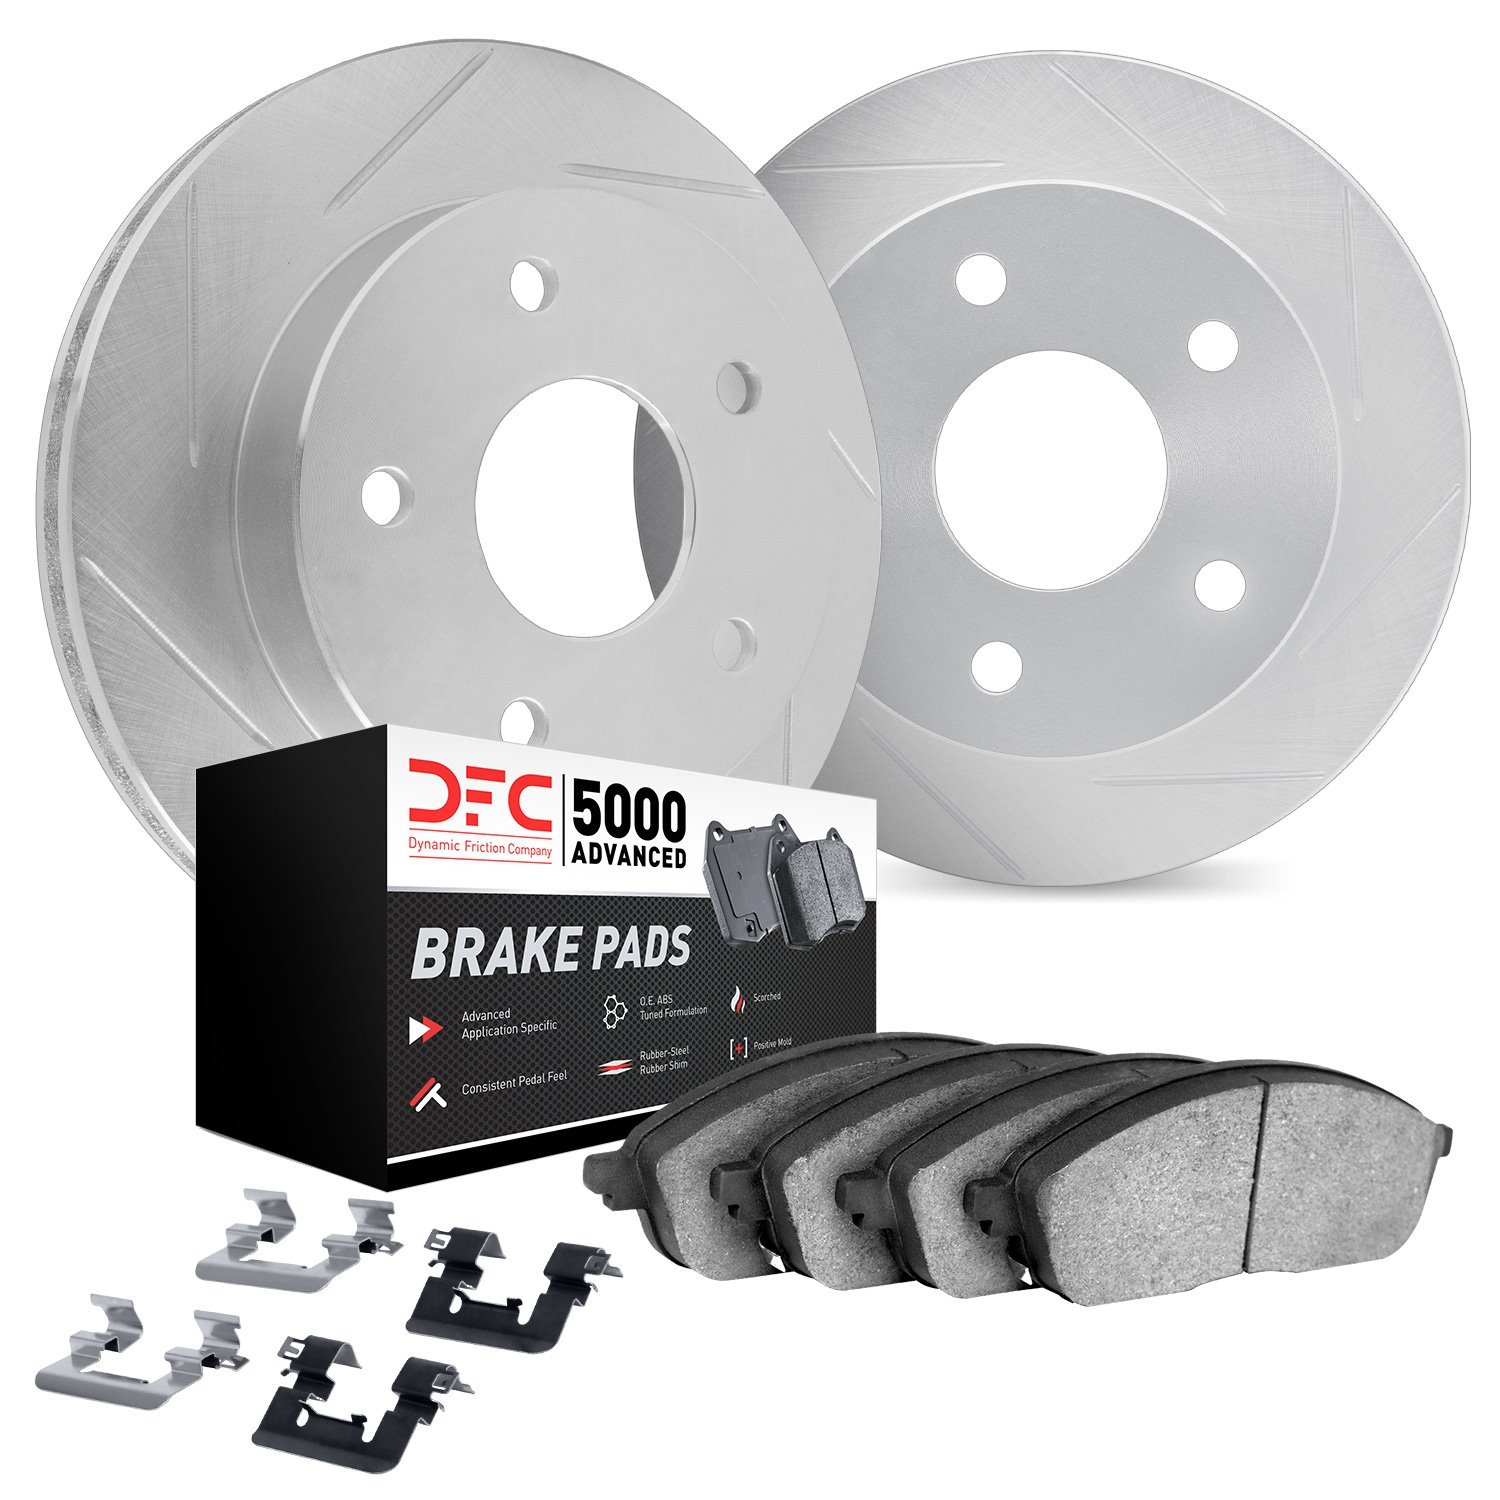 5512-40093 Slotted Brake Rotors w/5000 Advanced Brake Pads Kit & Hardware [Silver], Fits Select Multiple Makes/Models, Position: